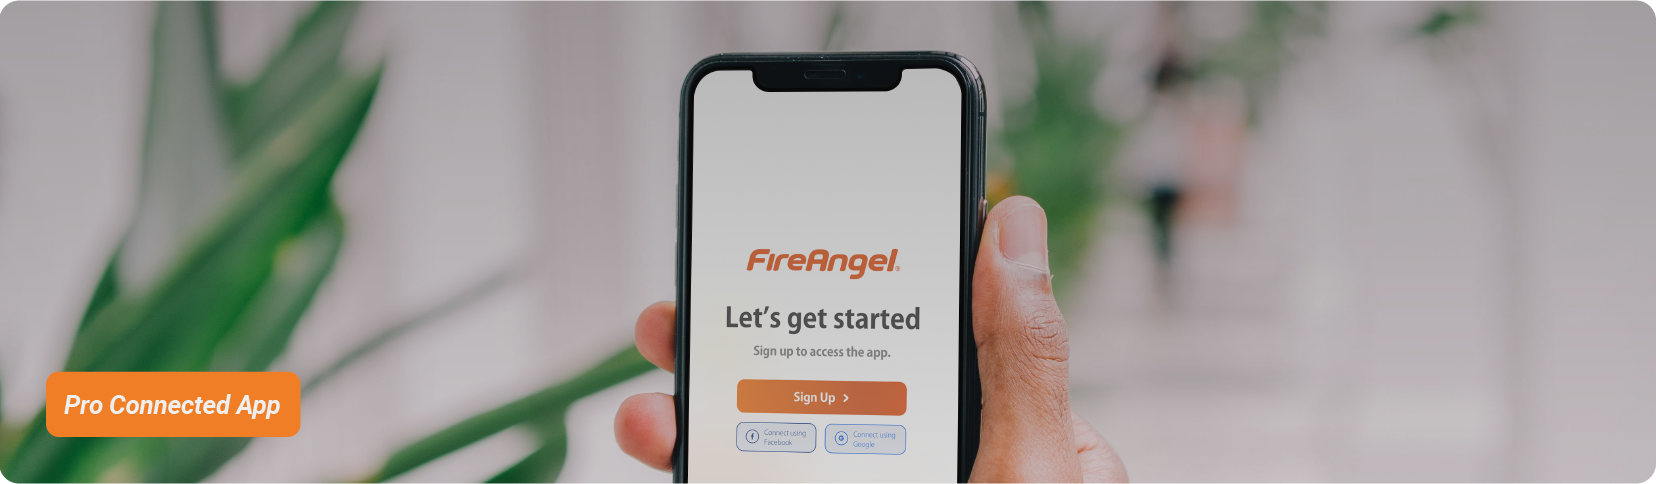 FireAngel Pro Connected